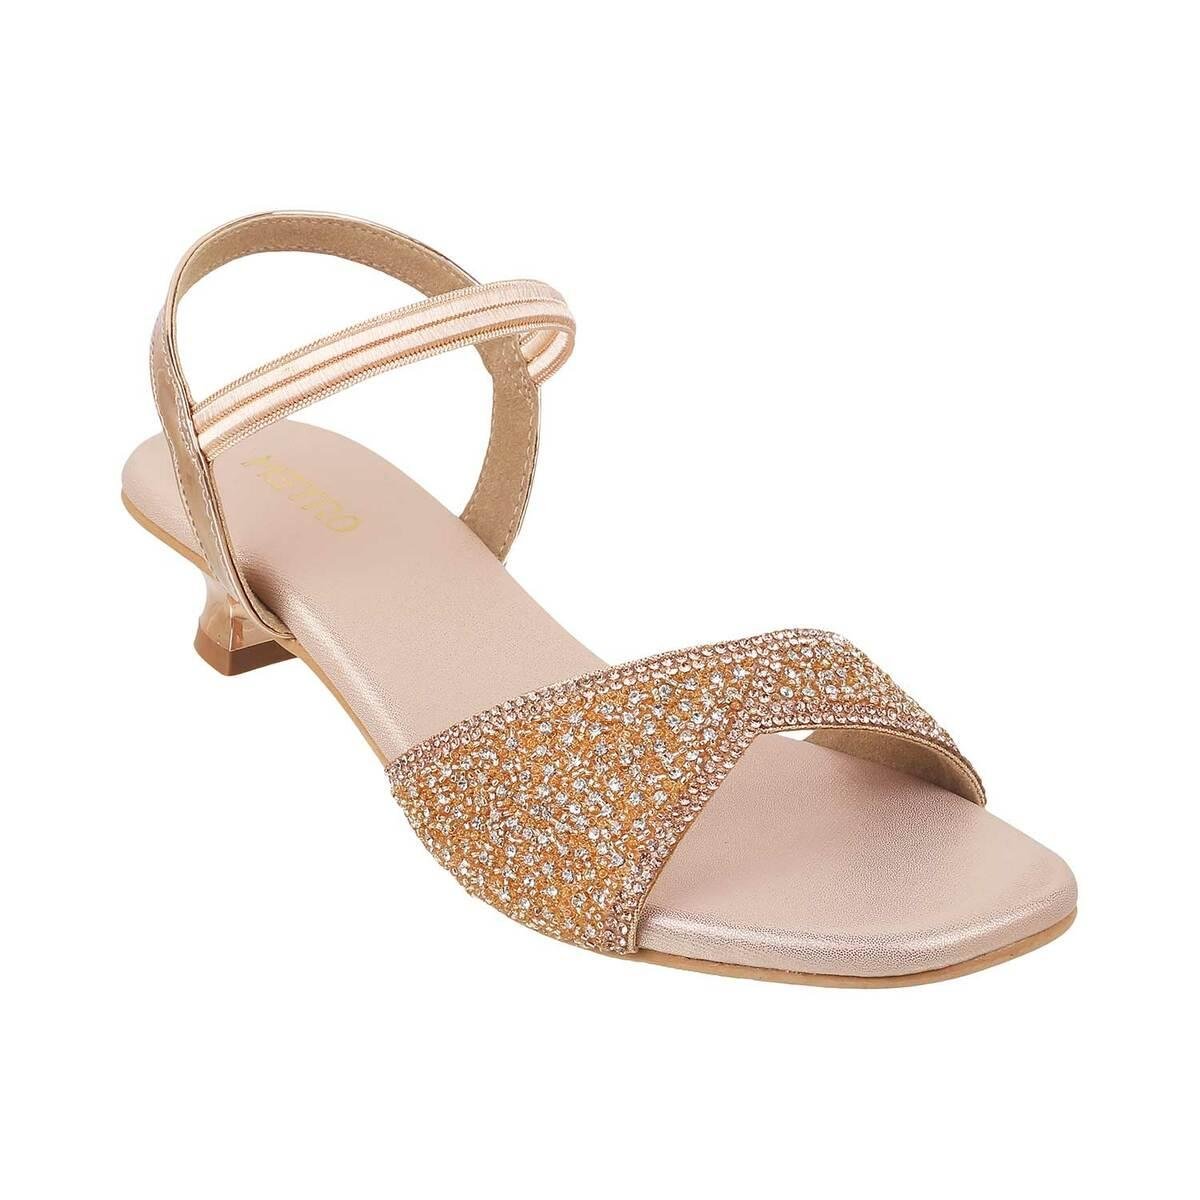 Block-heeled platform sandals - Rose gold-coloured - Ladies | H&M IN